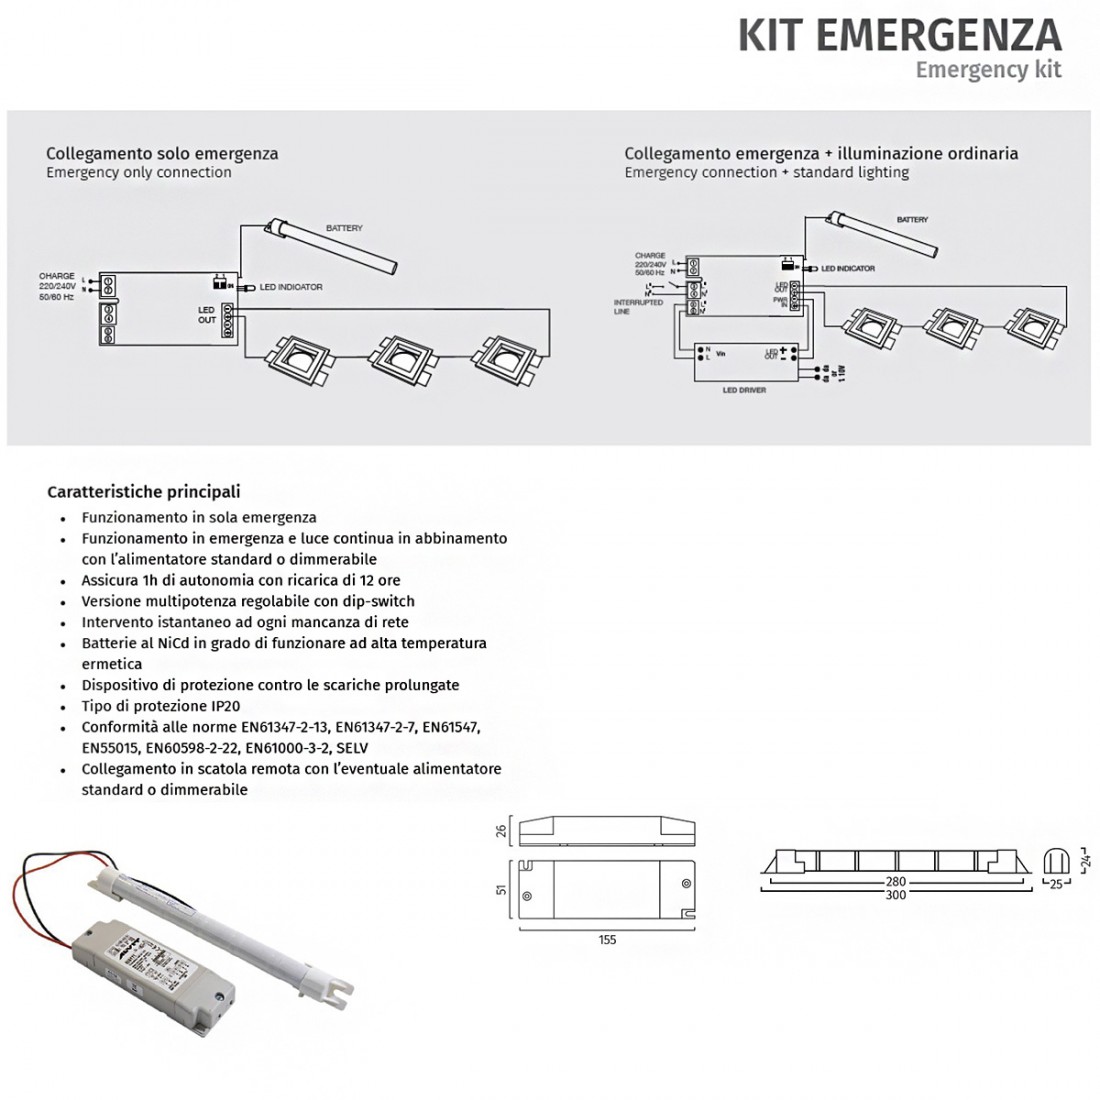 Applique gesso kit emergenza 9010 ISA 2421C+099.142 LED